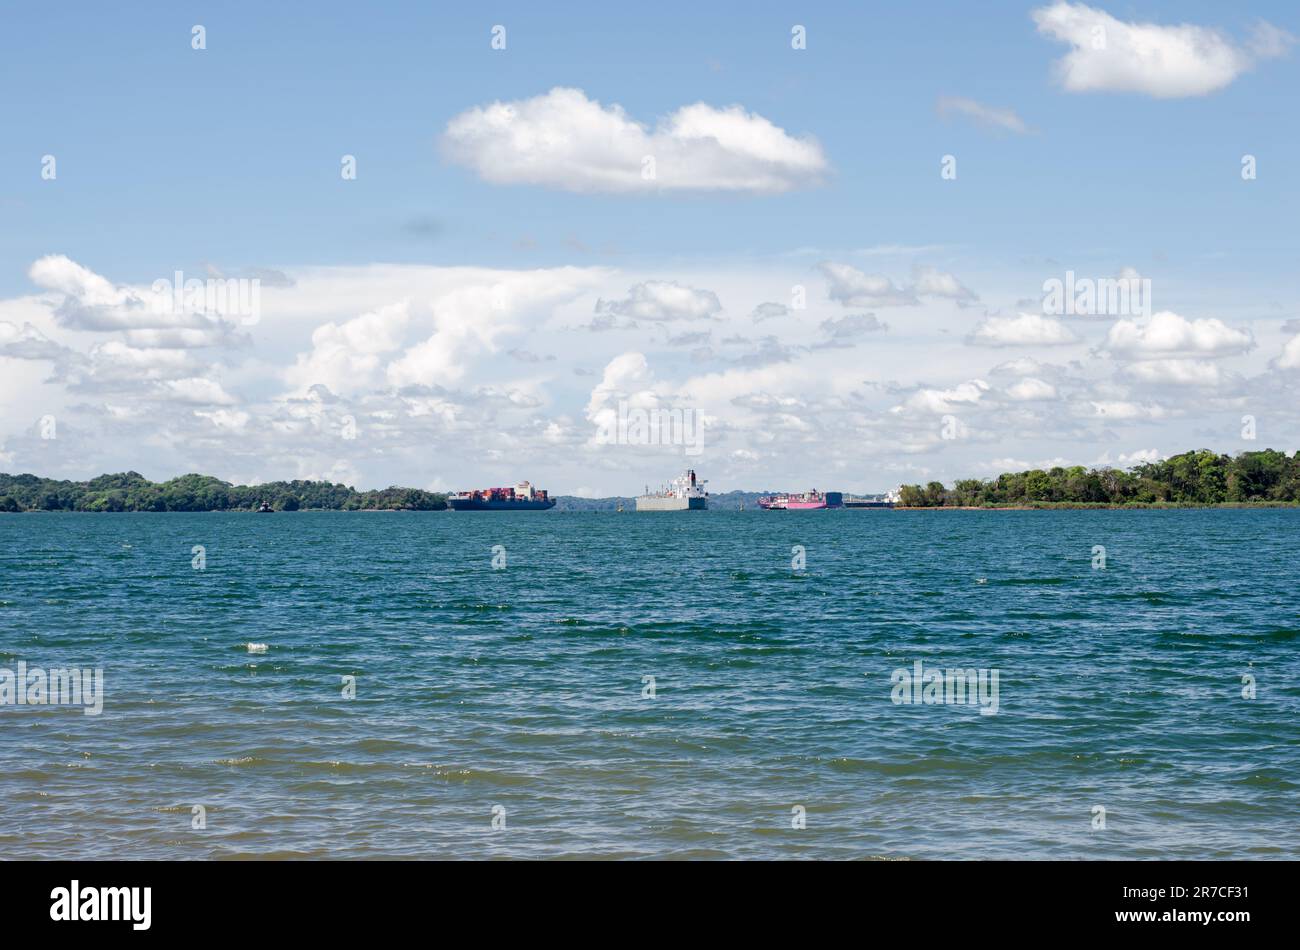 Gatun Lake. Ships seen in the distance await passage through the Panama Canal Stock Photo